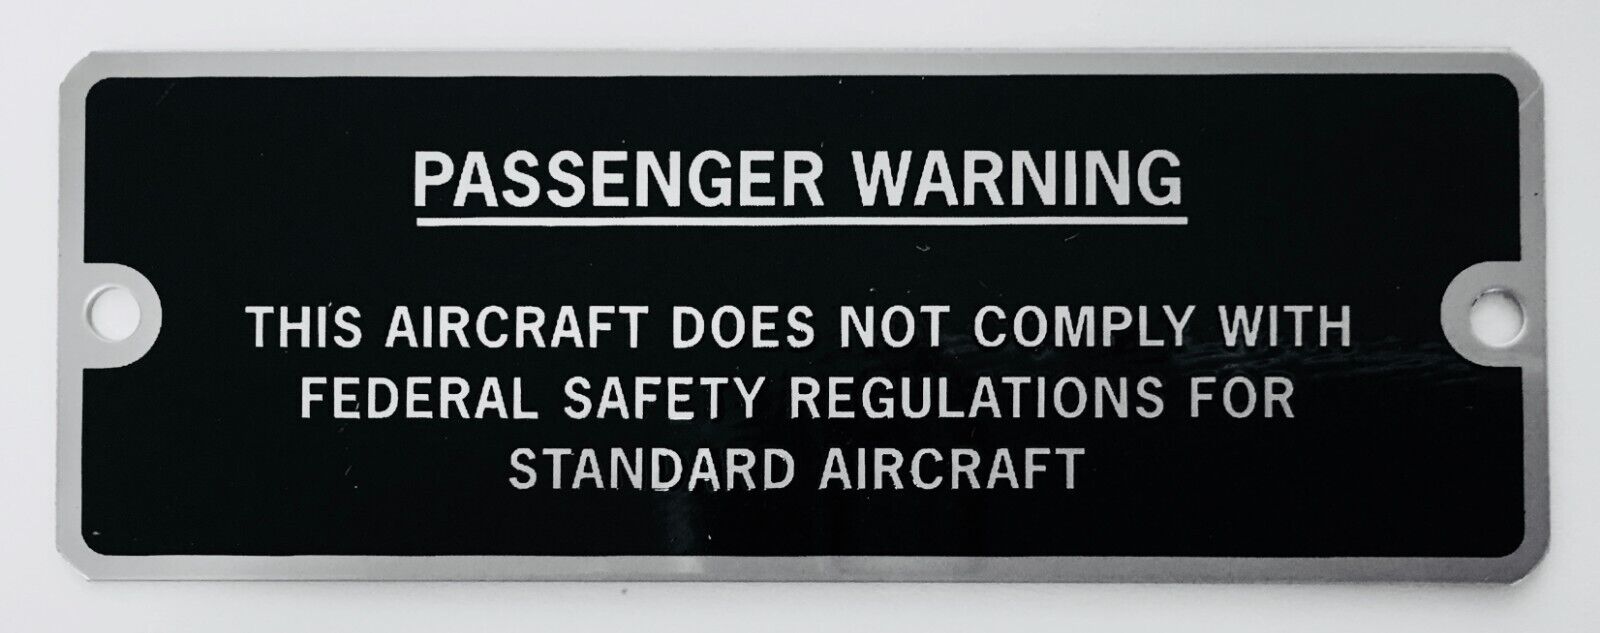 Amateur-Built Passenger Warning Experimental Aircraft Placard, Airplane PLA-0110